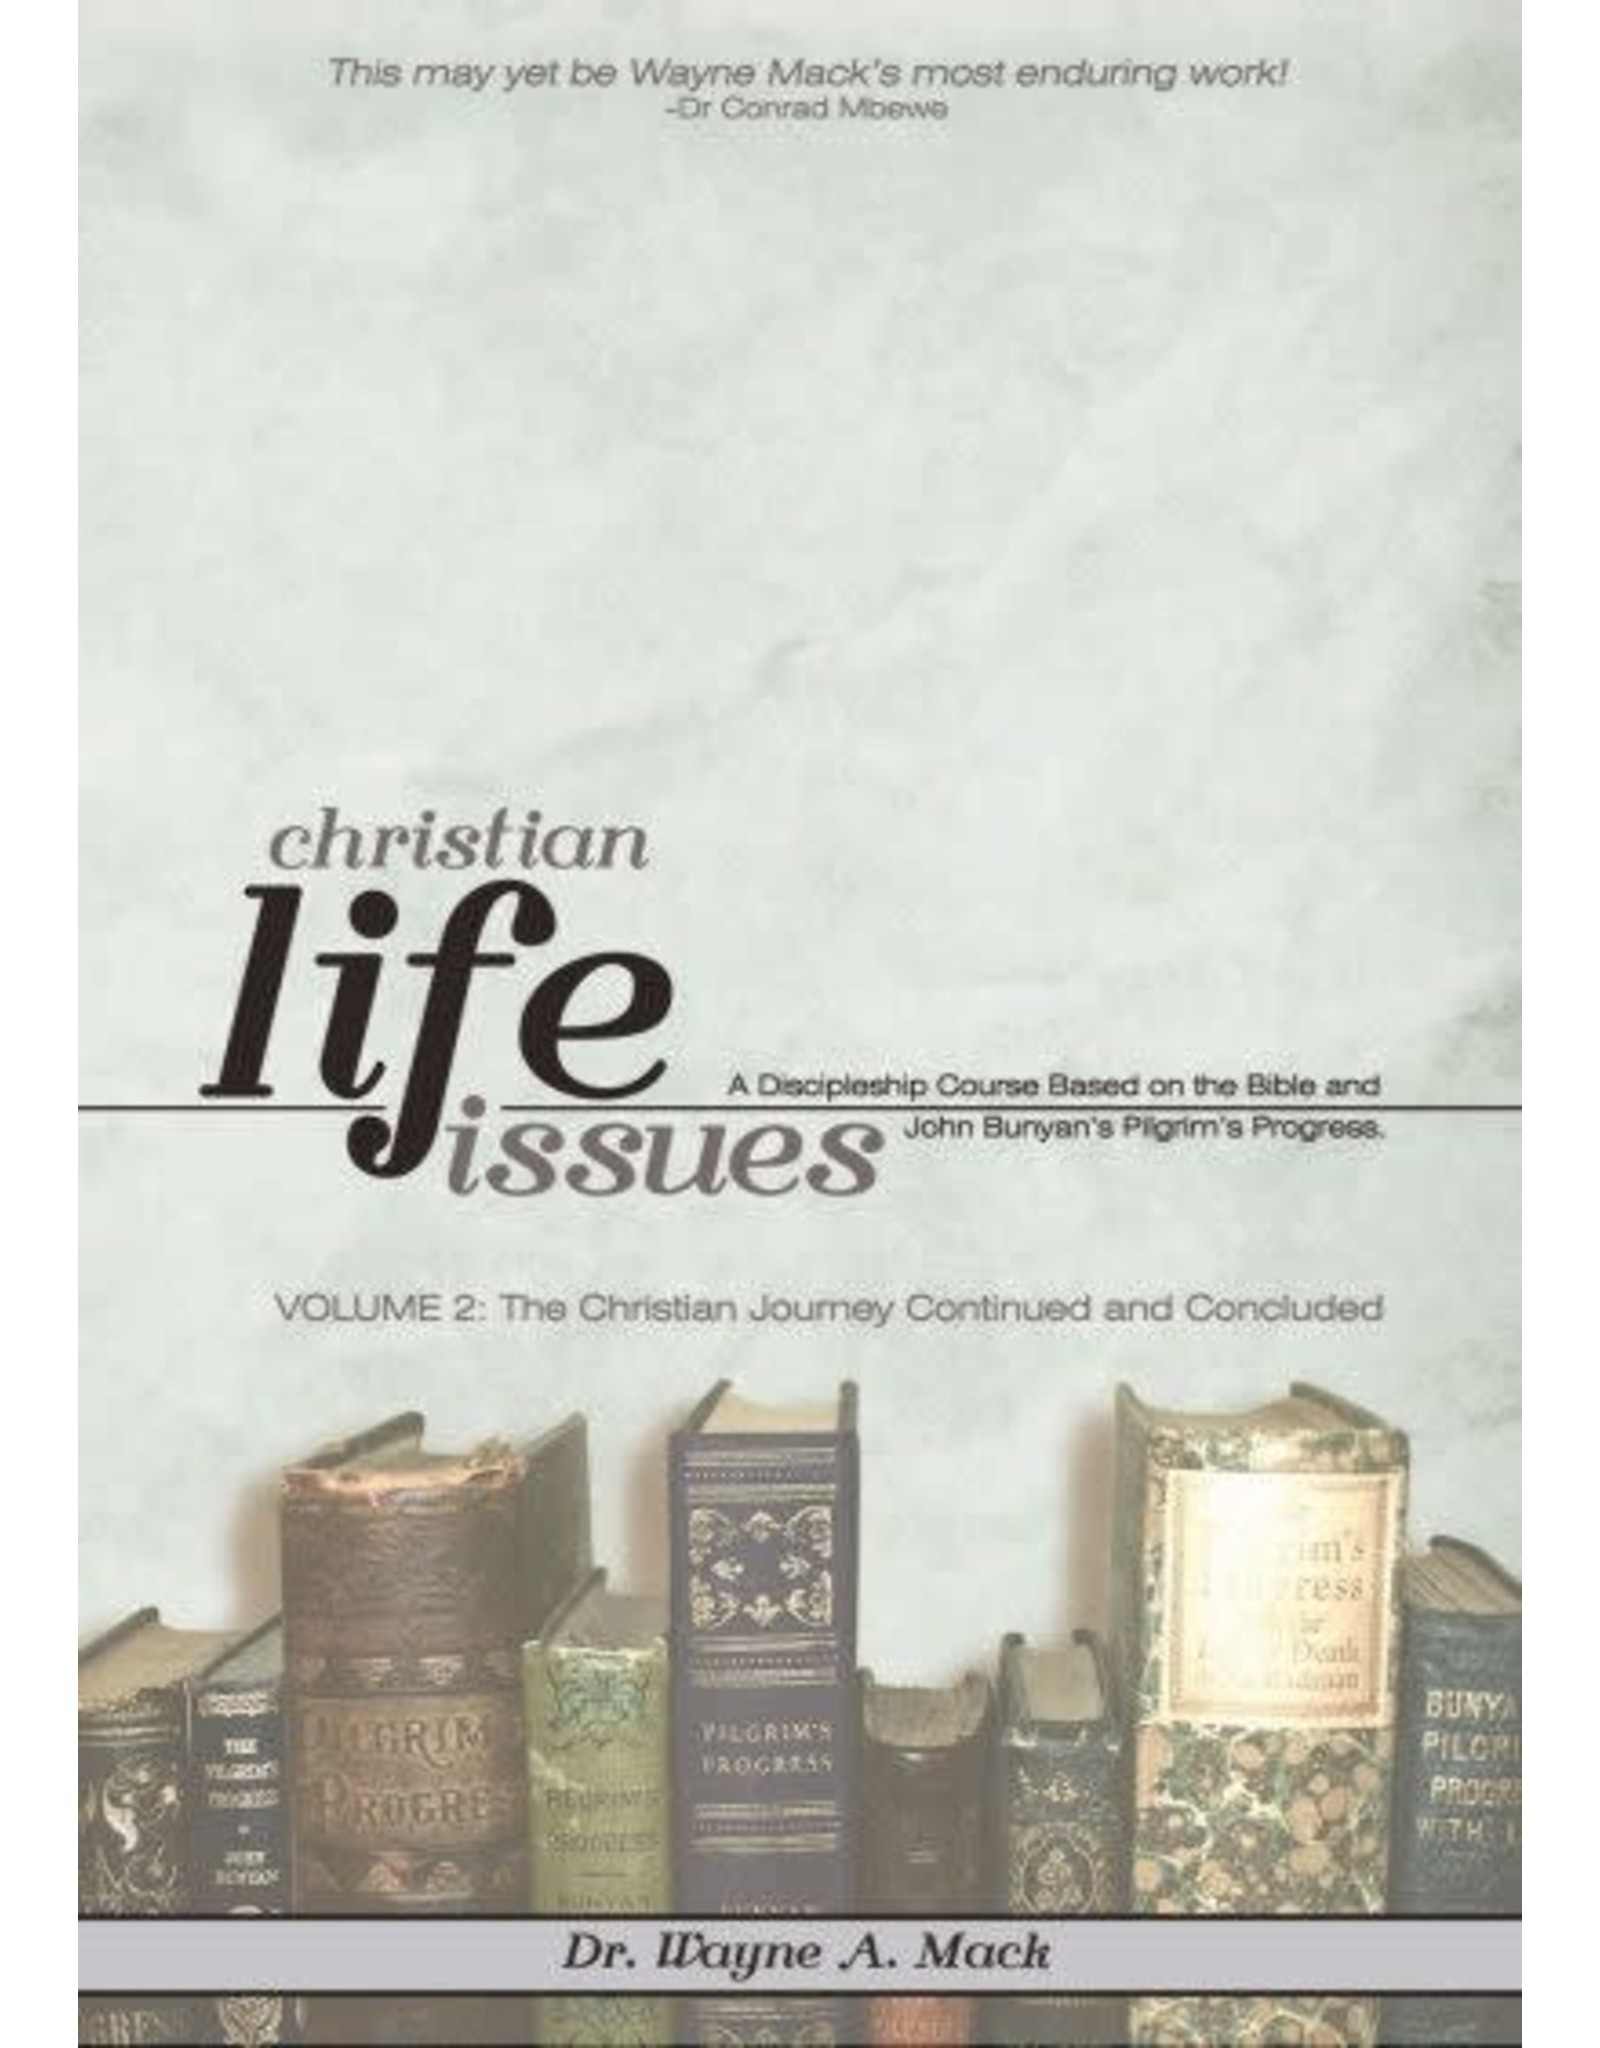 Wayne A Mack Christian Life Issues  Volume 1